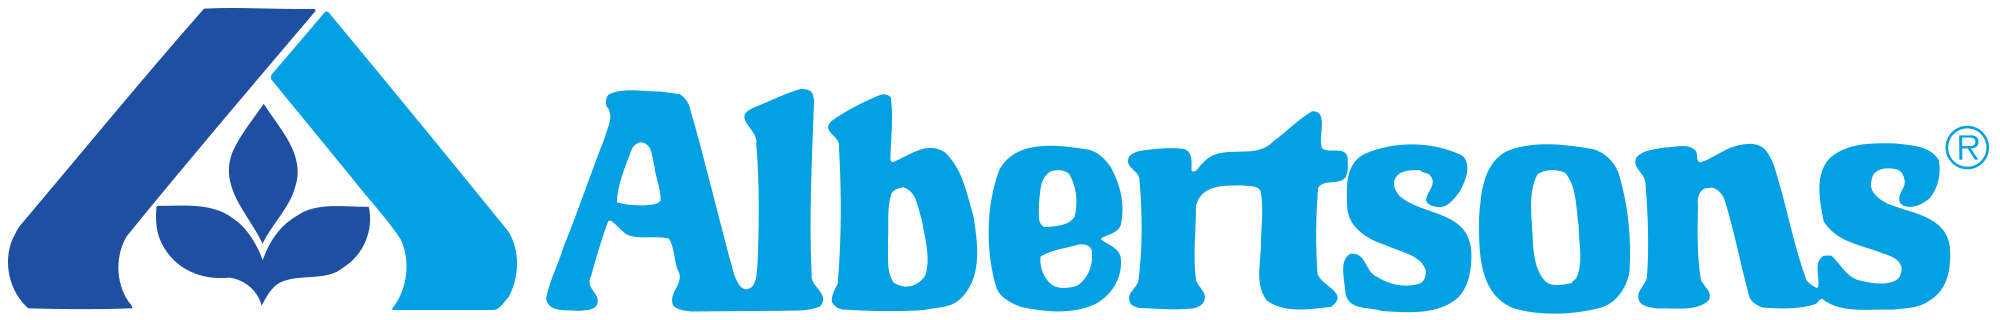 Albertsons_logo.png